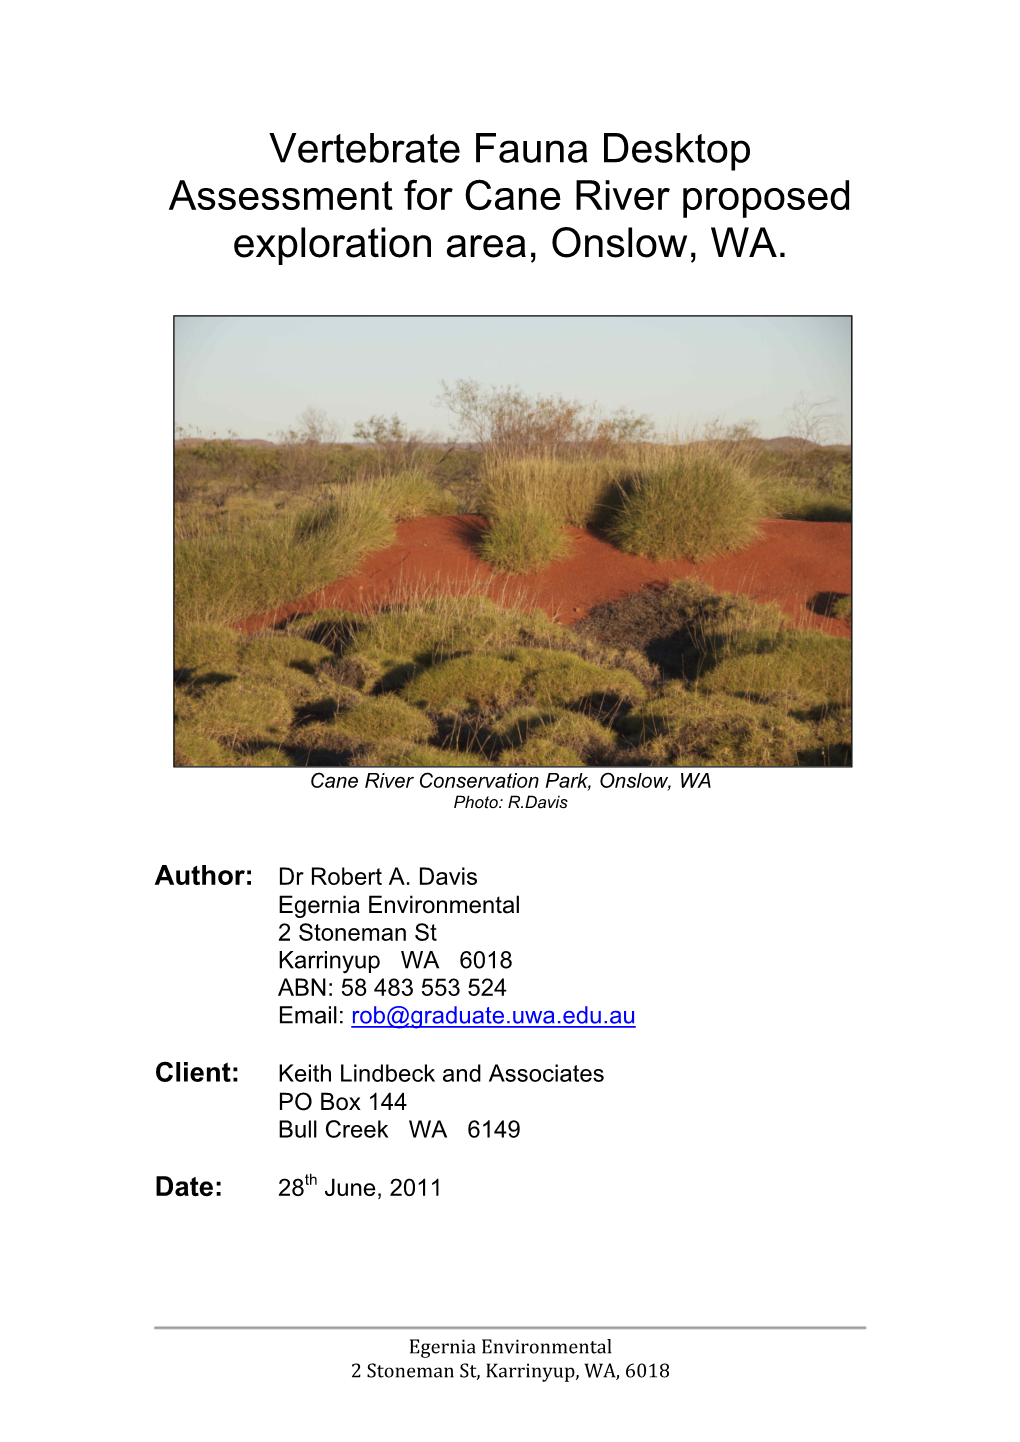 Vertebrate Fauna Desktop Assessment for Cane River Proposed Exploration Area, Onslow, WA